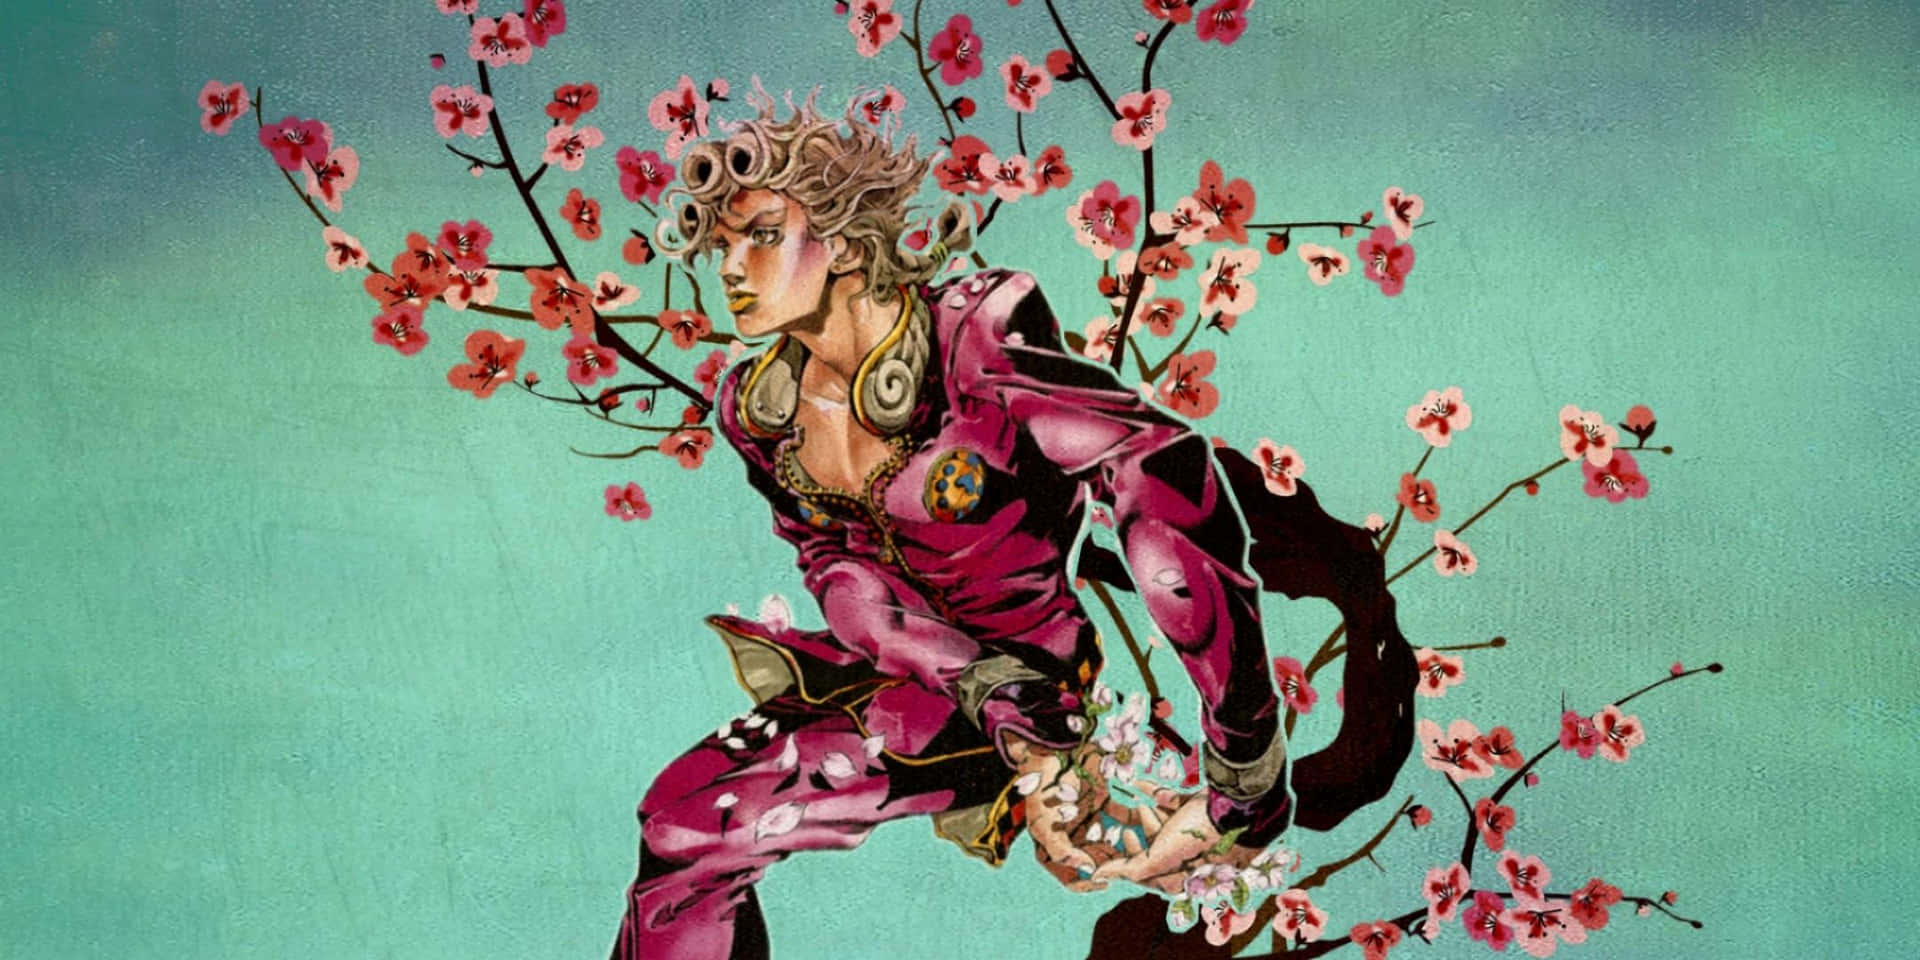 Enman I Rosa Håller I En Gren Med Blommor. Wallpaper